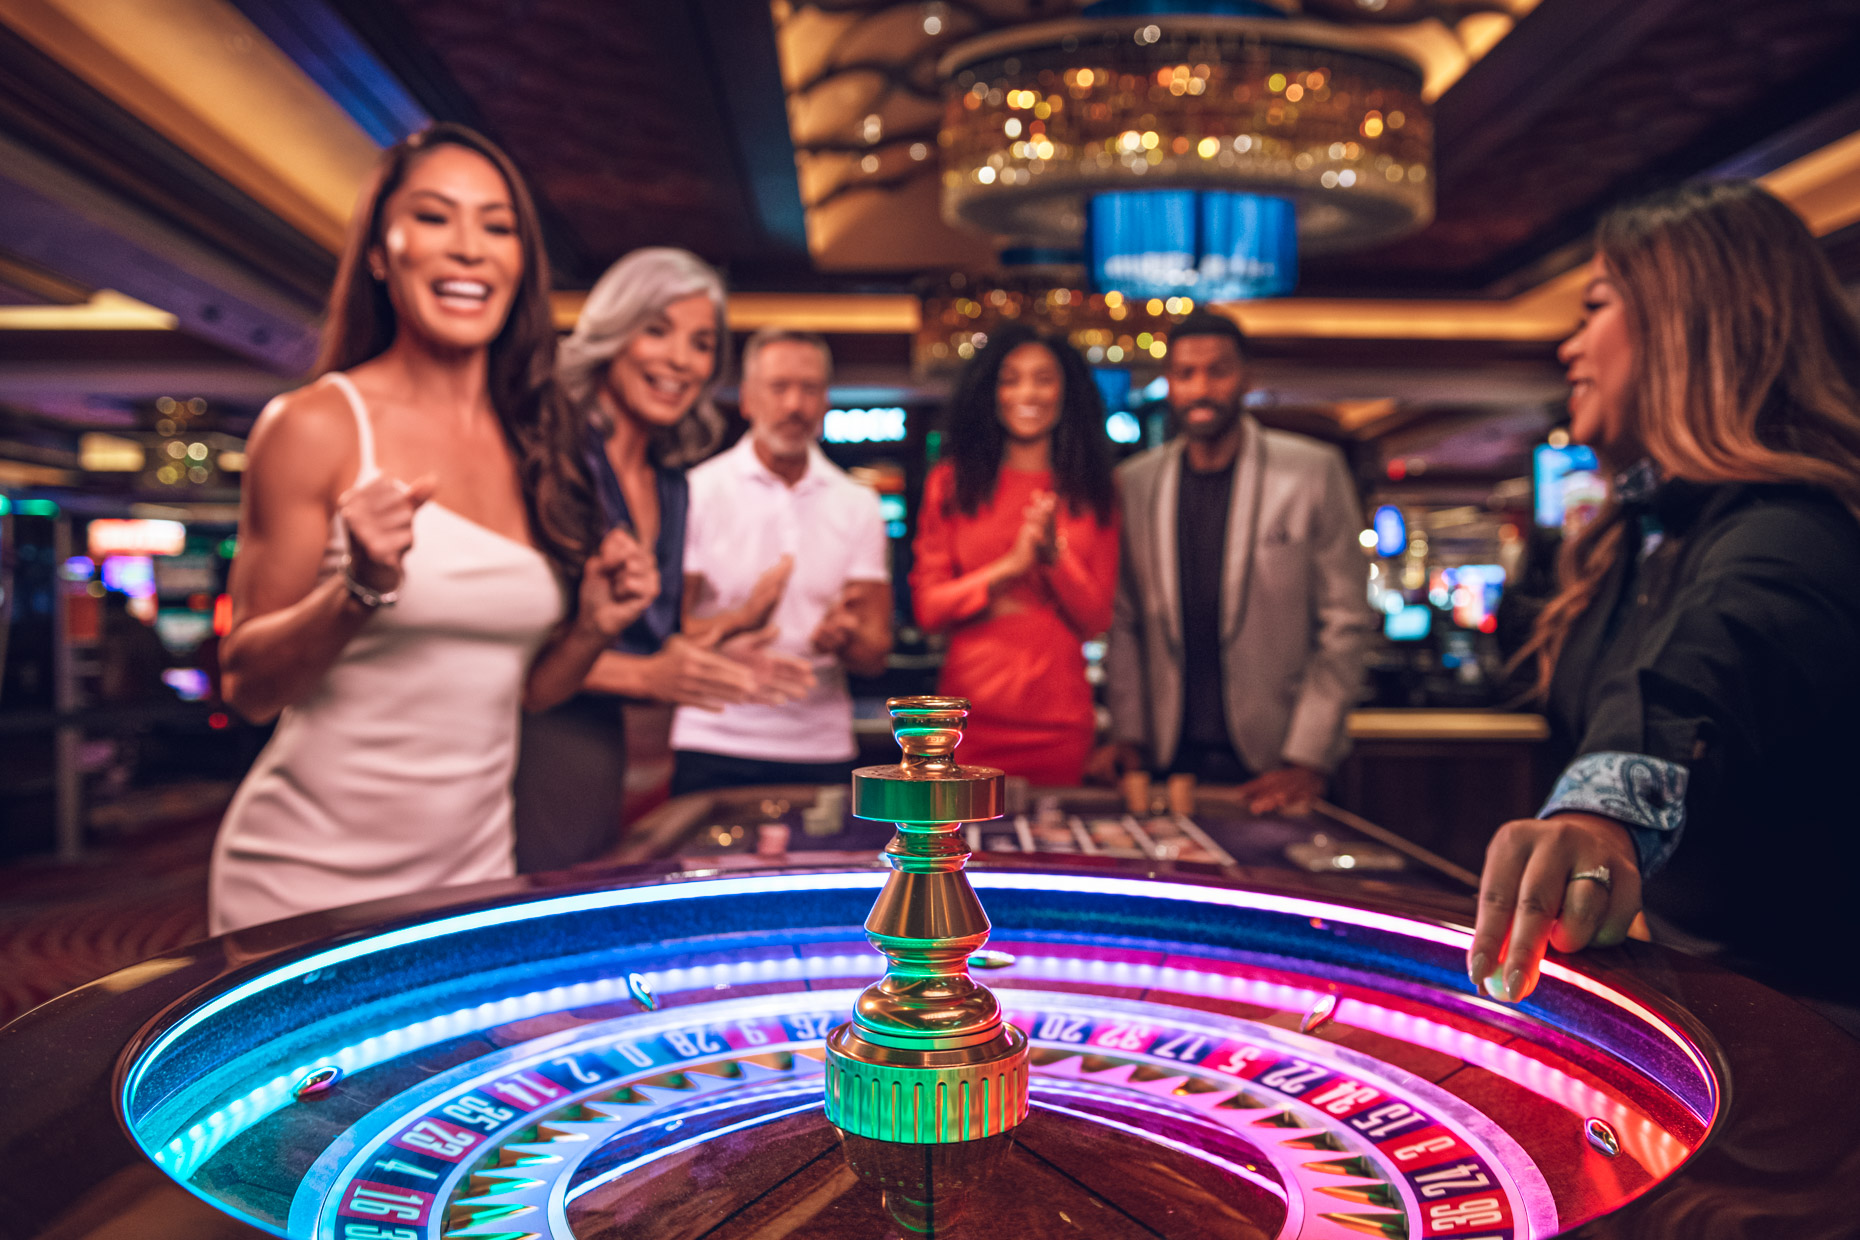 Commercial Casino Photoshoot